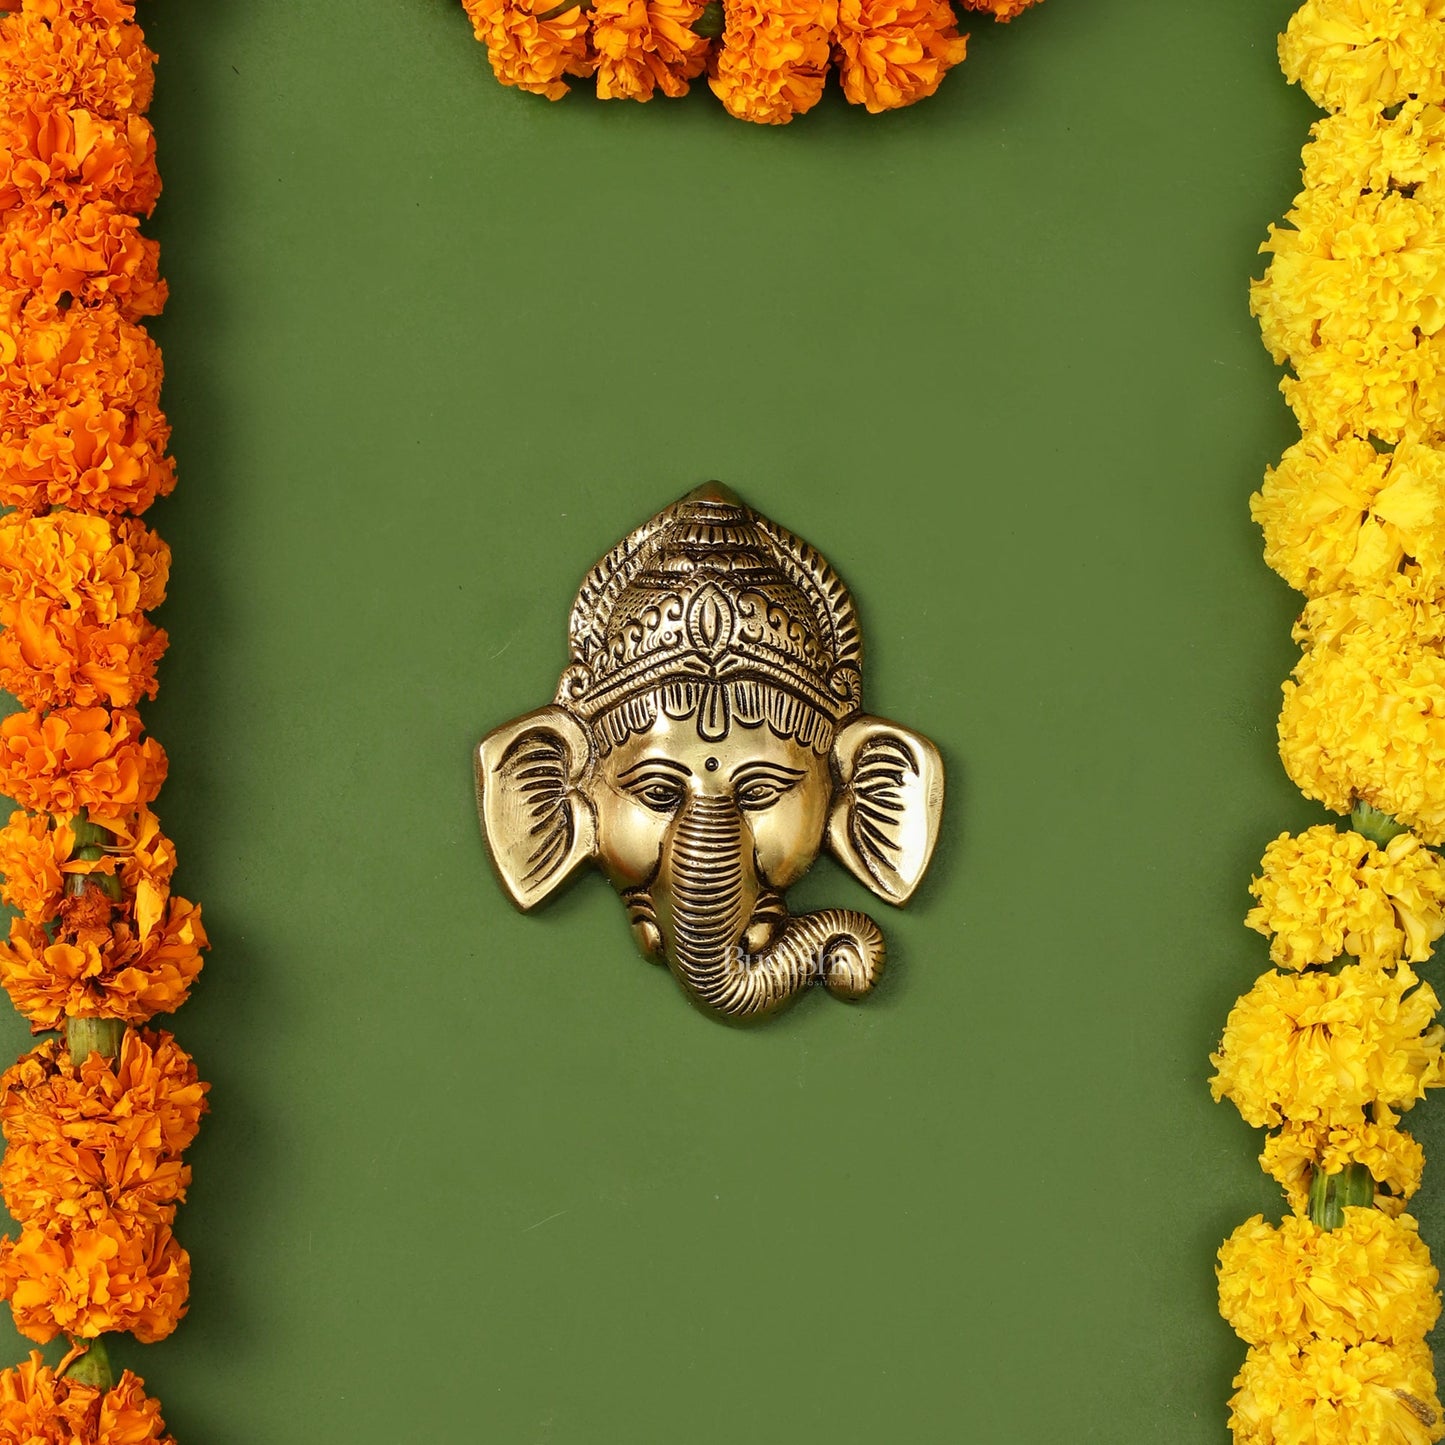 Brass Ganesha Face Wall Hanging - 4 x 3.5 inch - Budhshiv.com